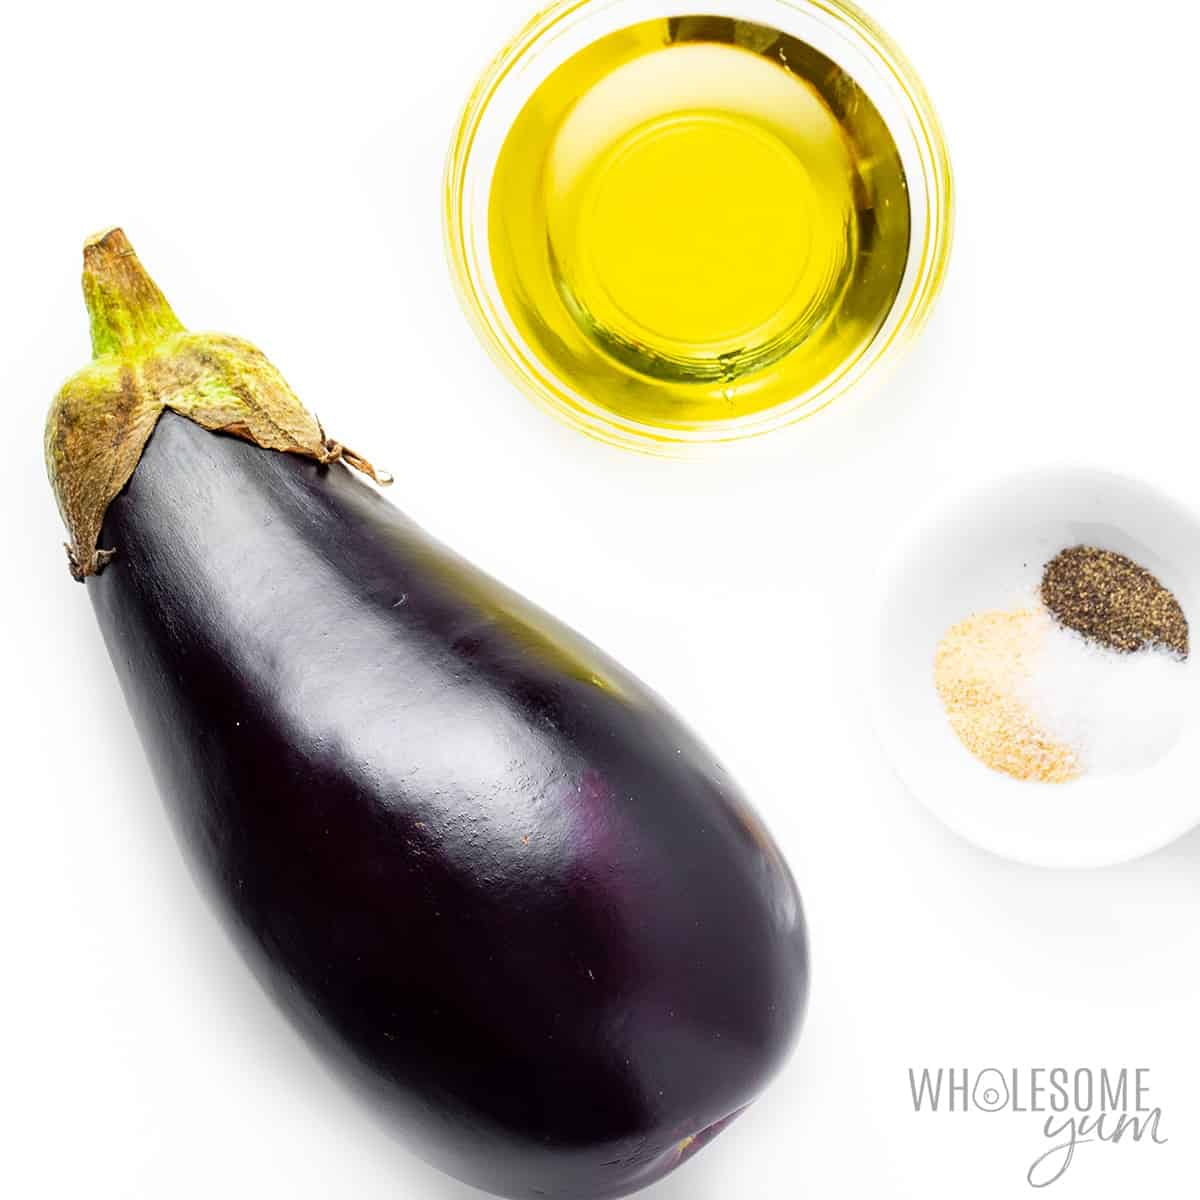 Sauteed eggplant ingredients